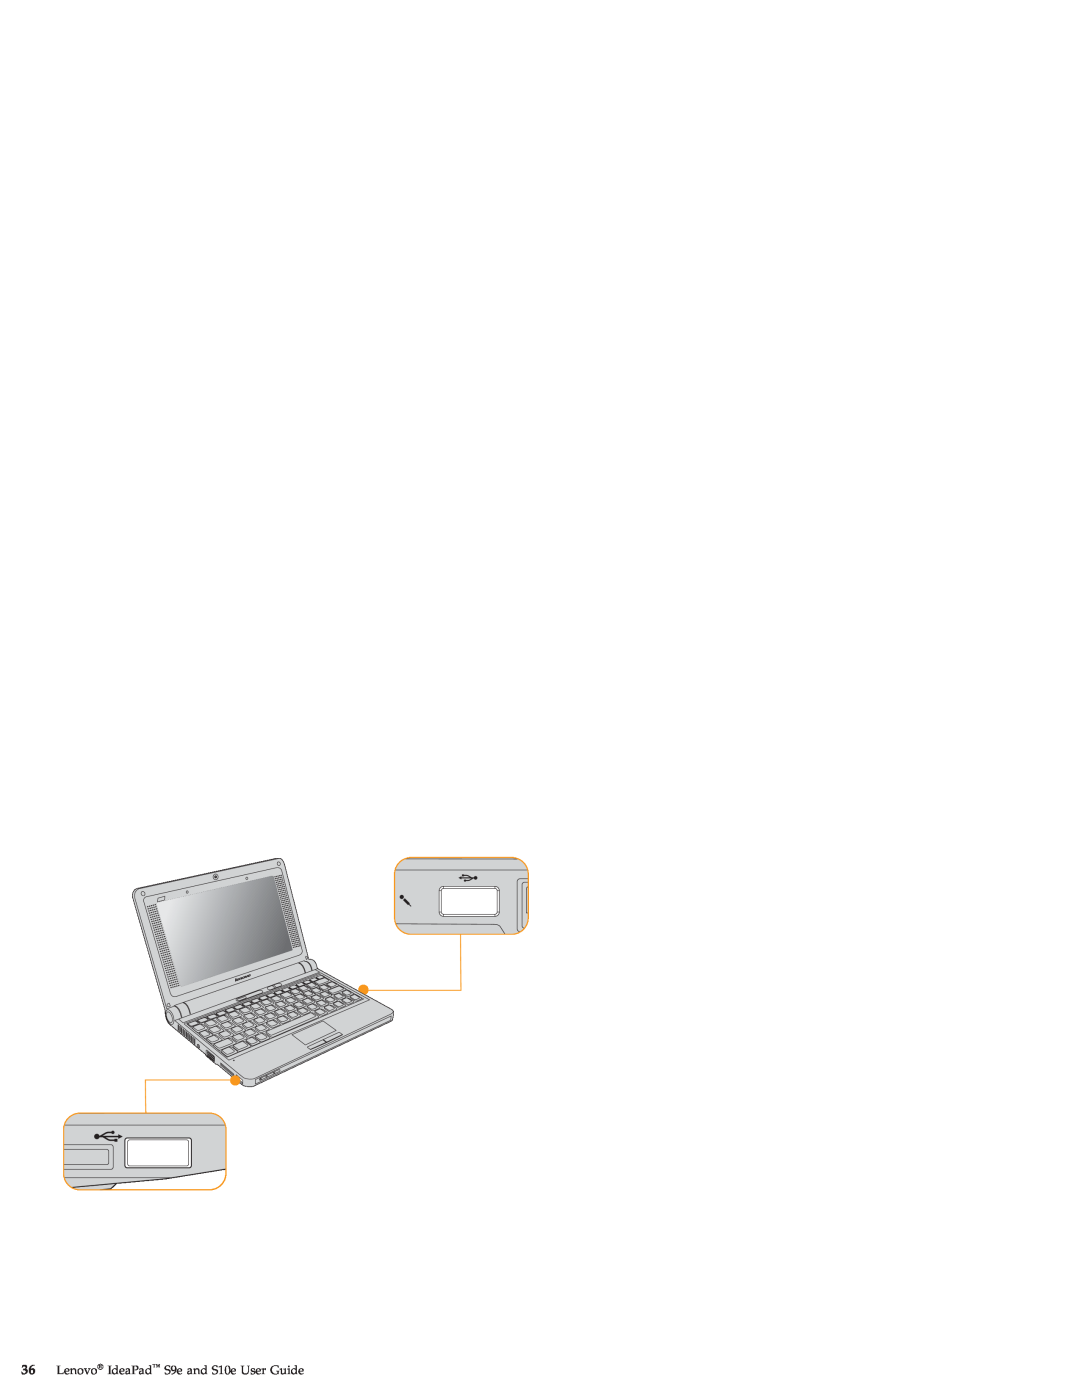 Lenovo S10E, S9E manual Lenovo IdeaPad S9e and S10e User Guide 